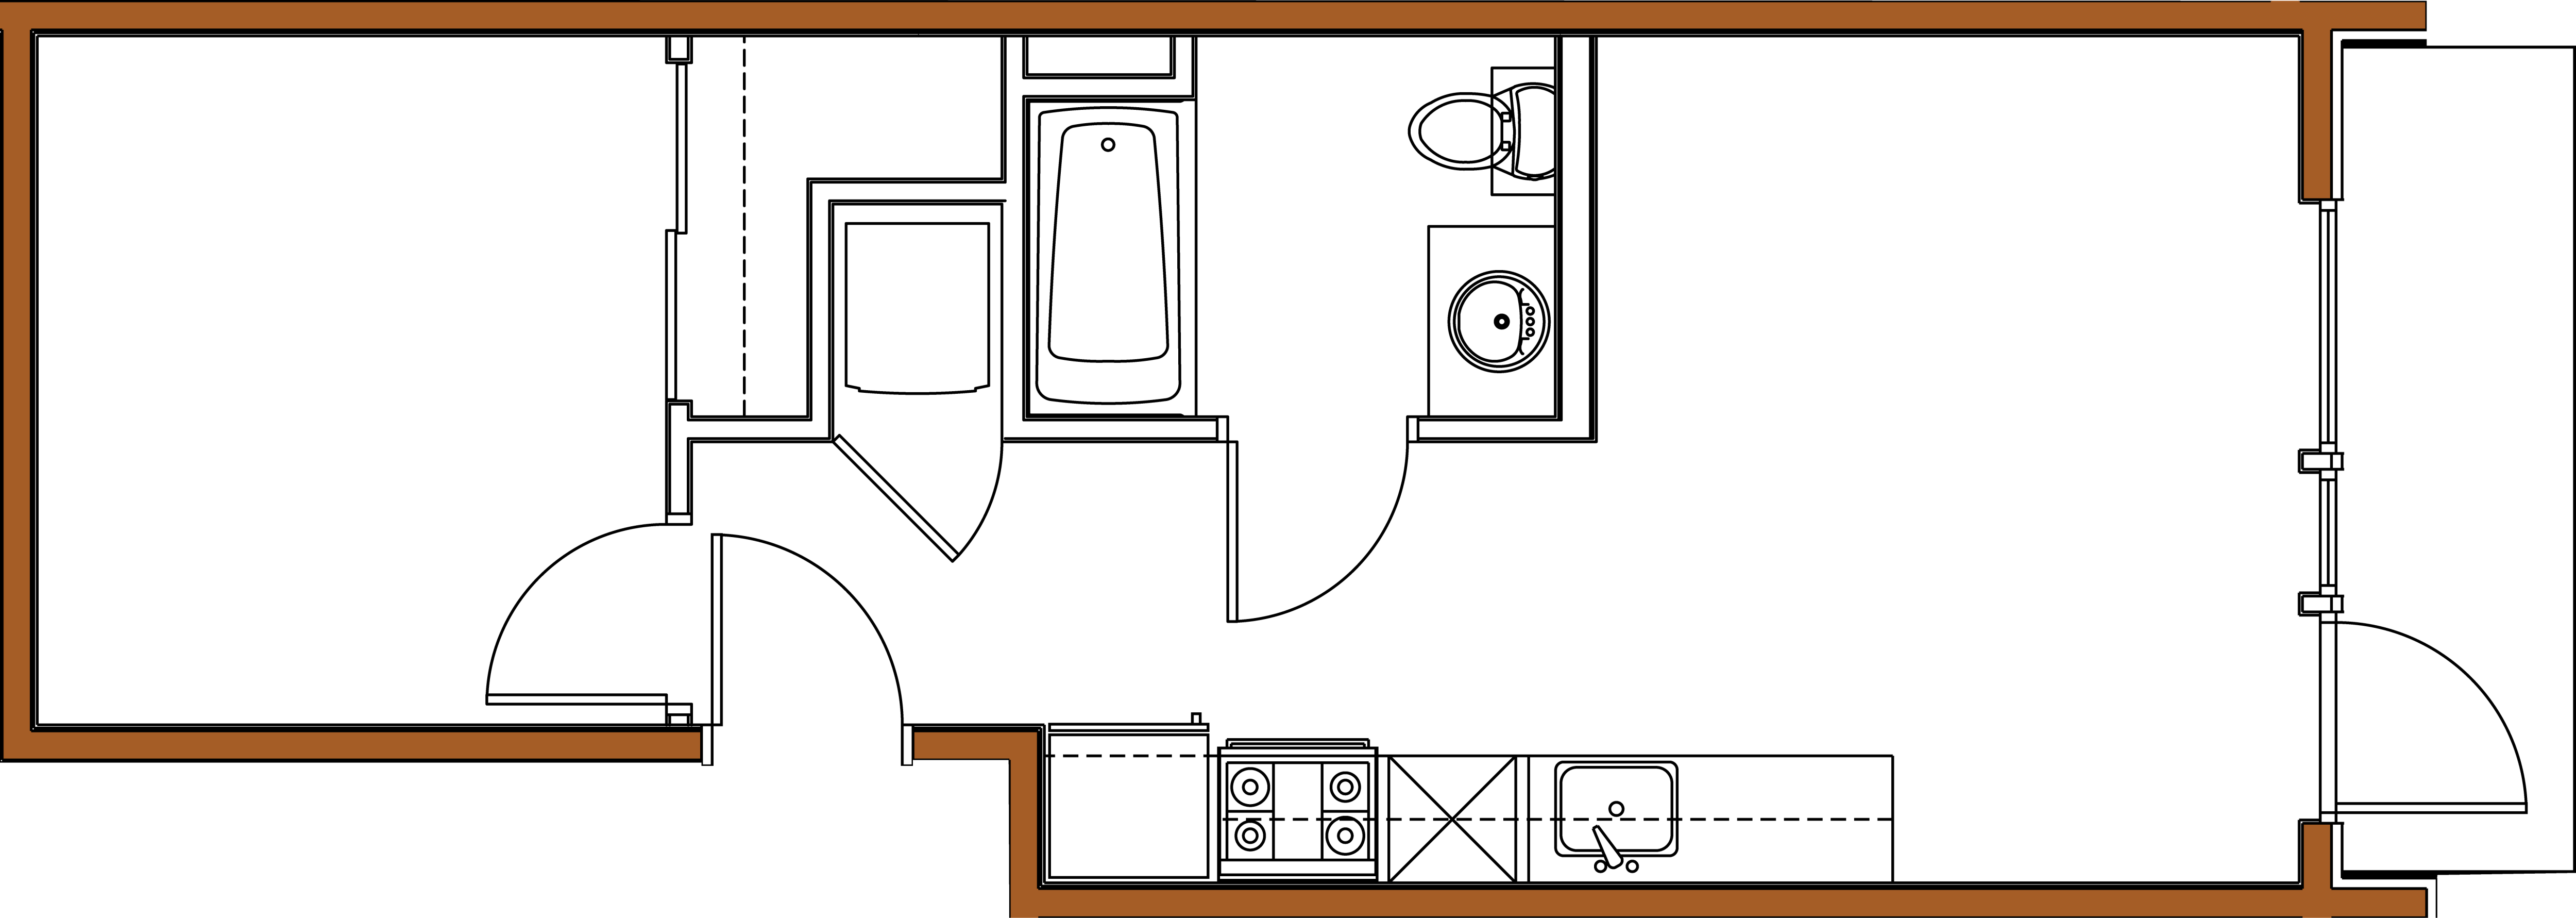 Yukon Flats, 1 Bedroom, Galley - Floorplan.png